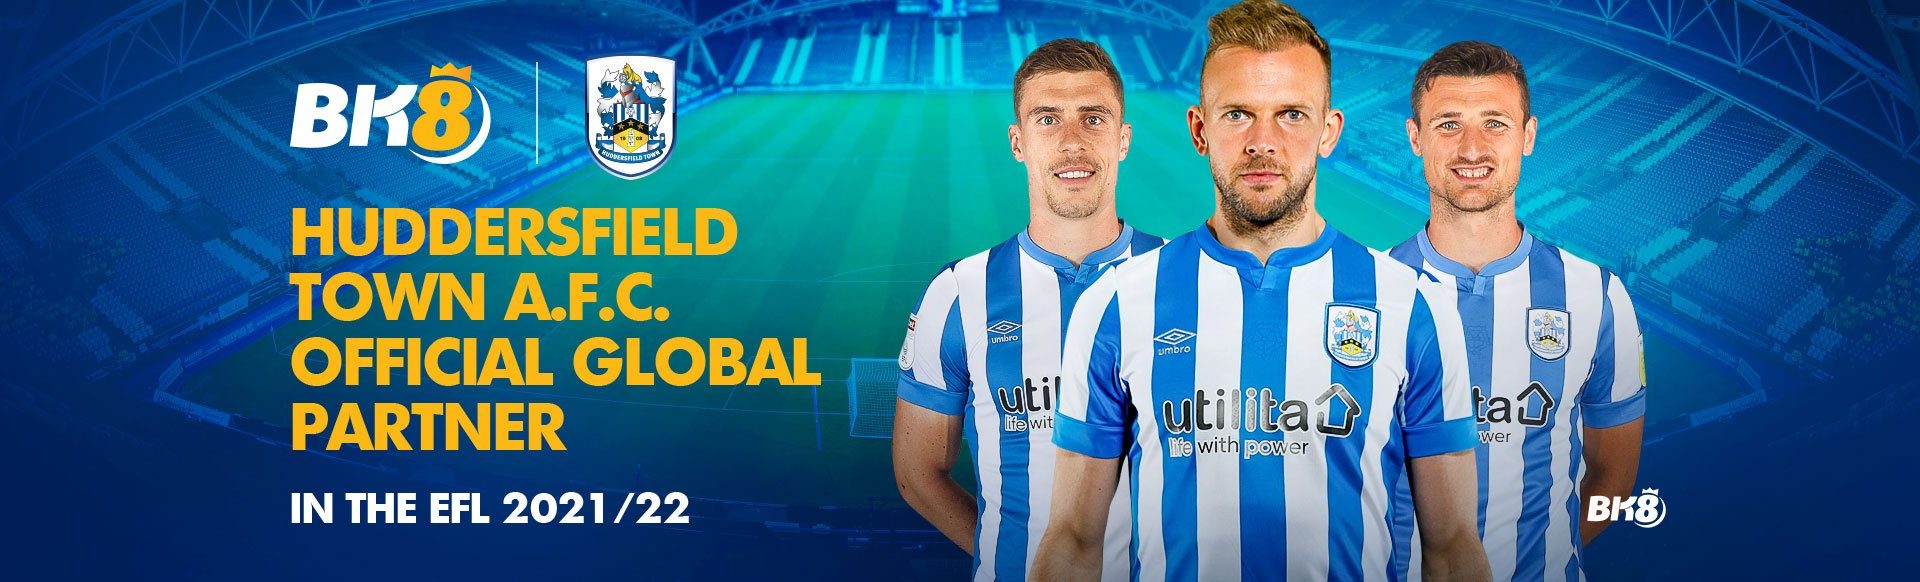 Huddersfield Town A.F.C. Official Global Partner - BK8